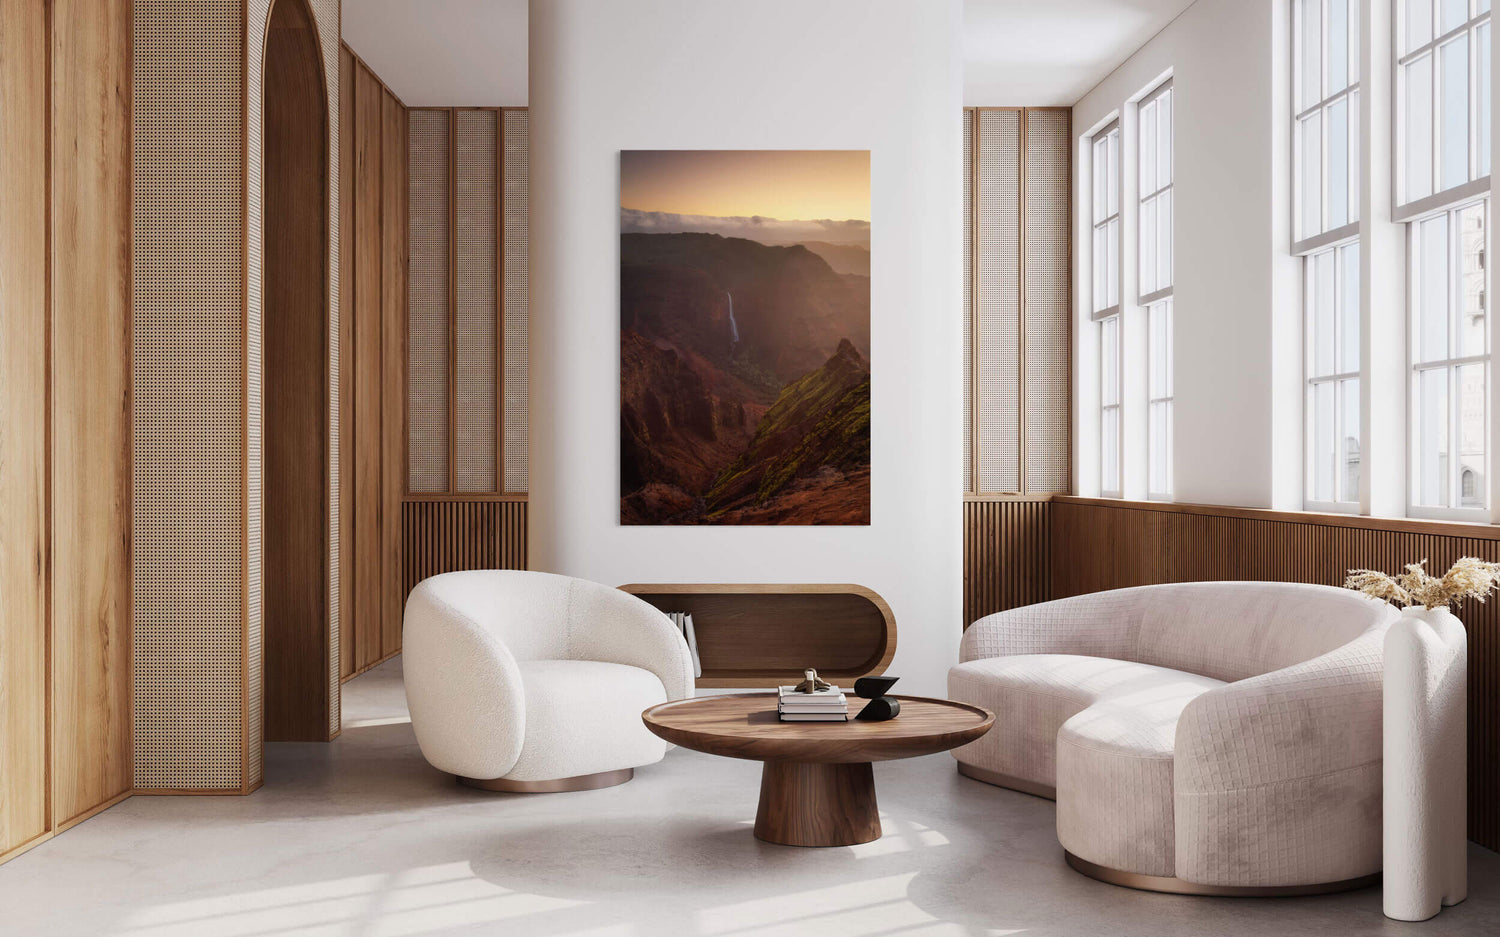 A Waimea Canyon sunrise picture from Kauai hangs in a living room.